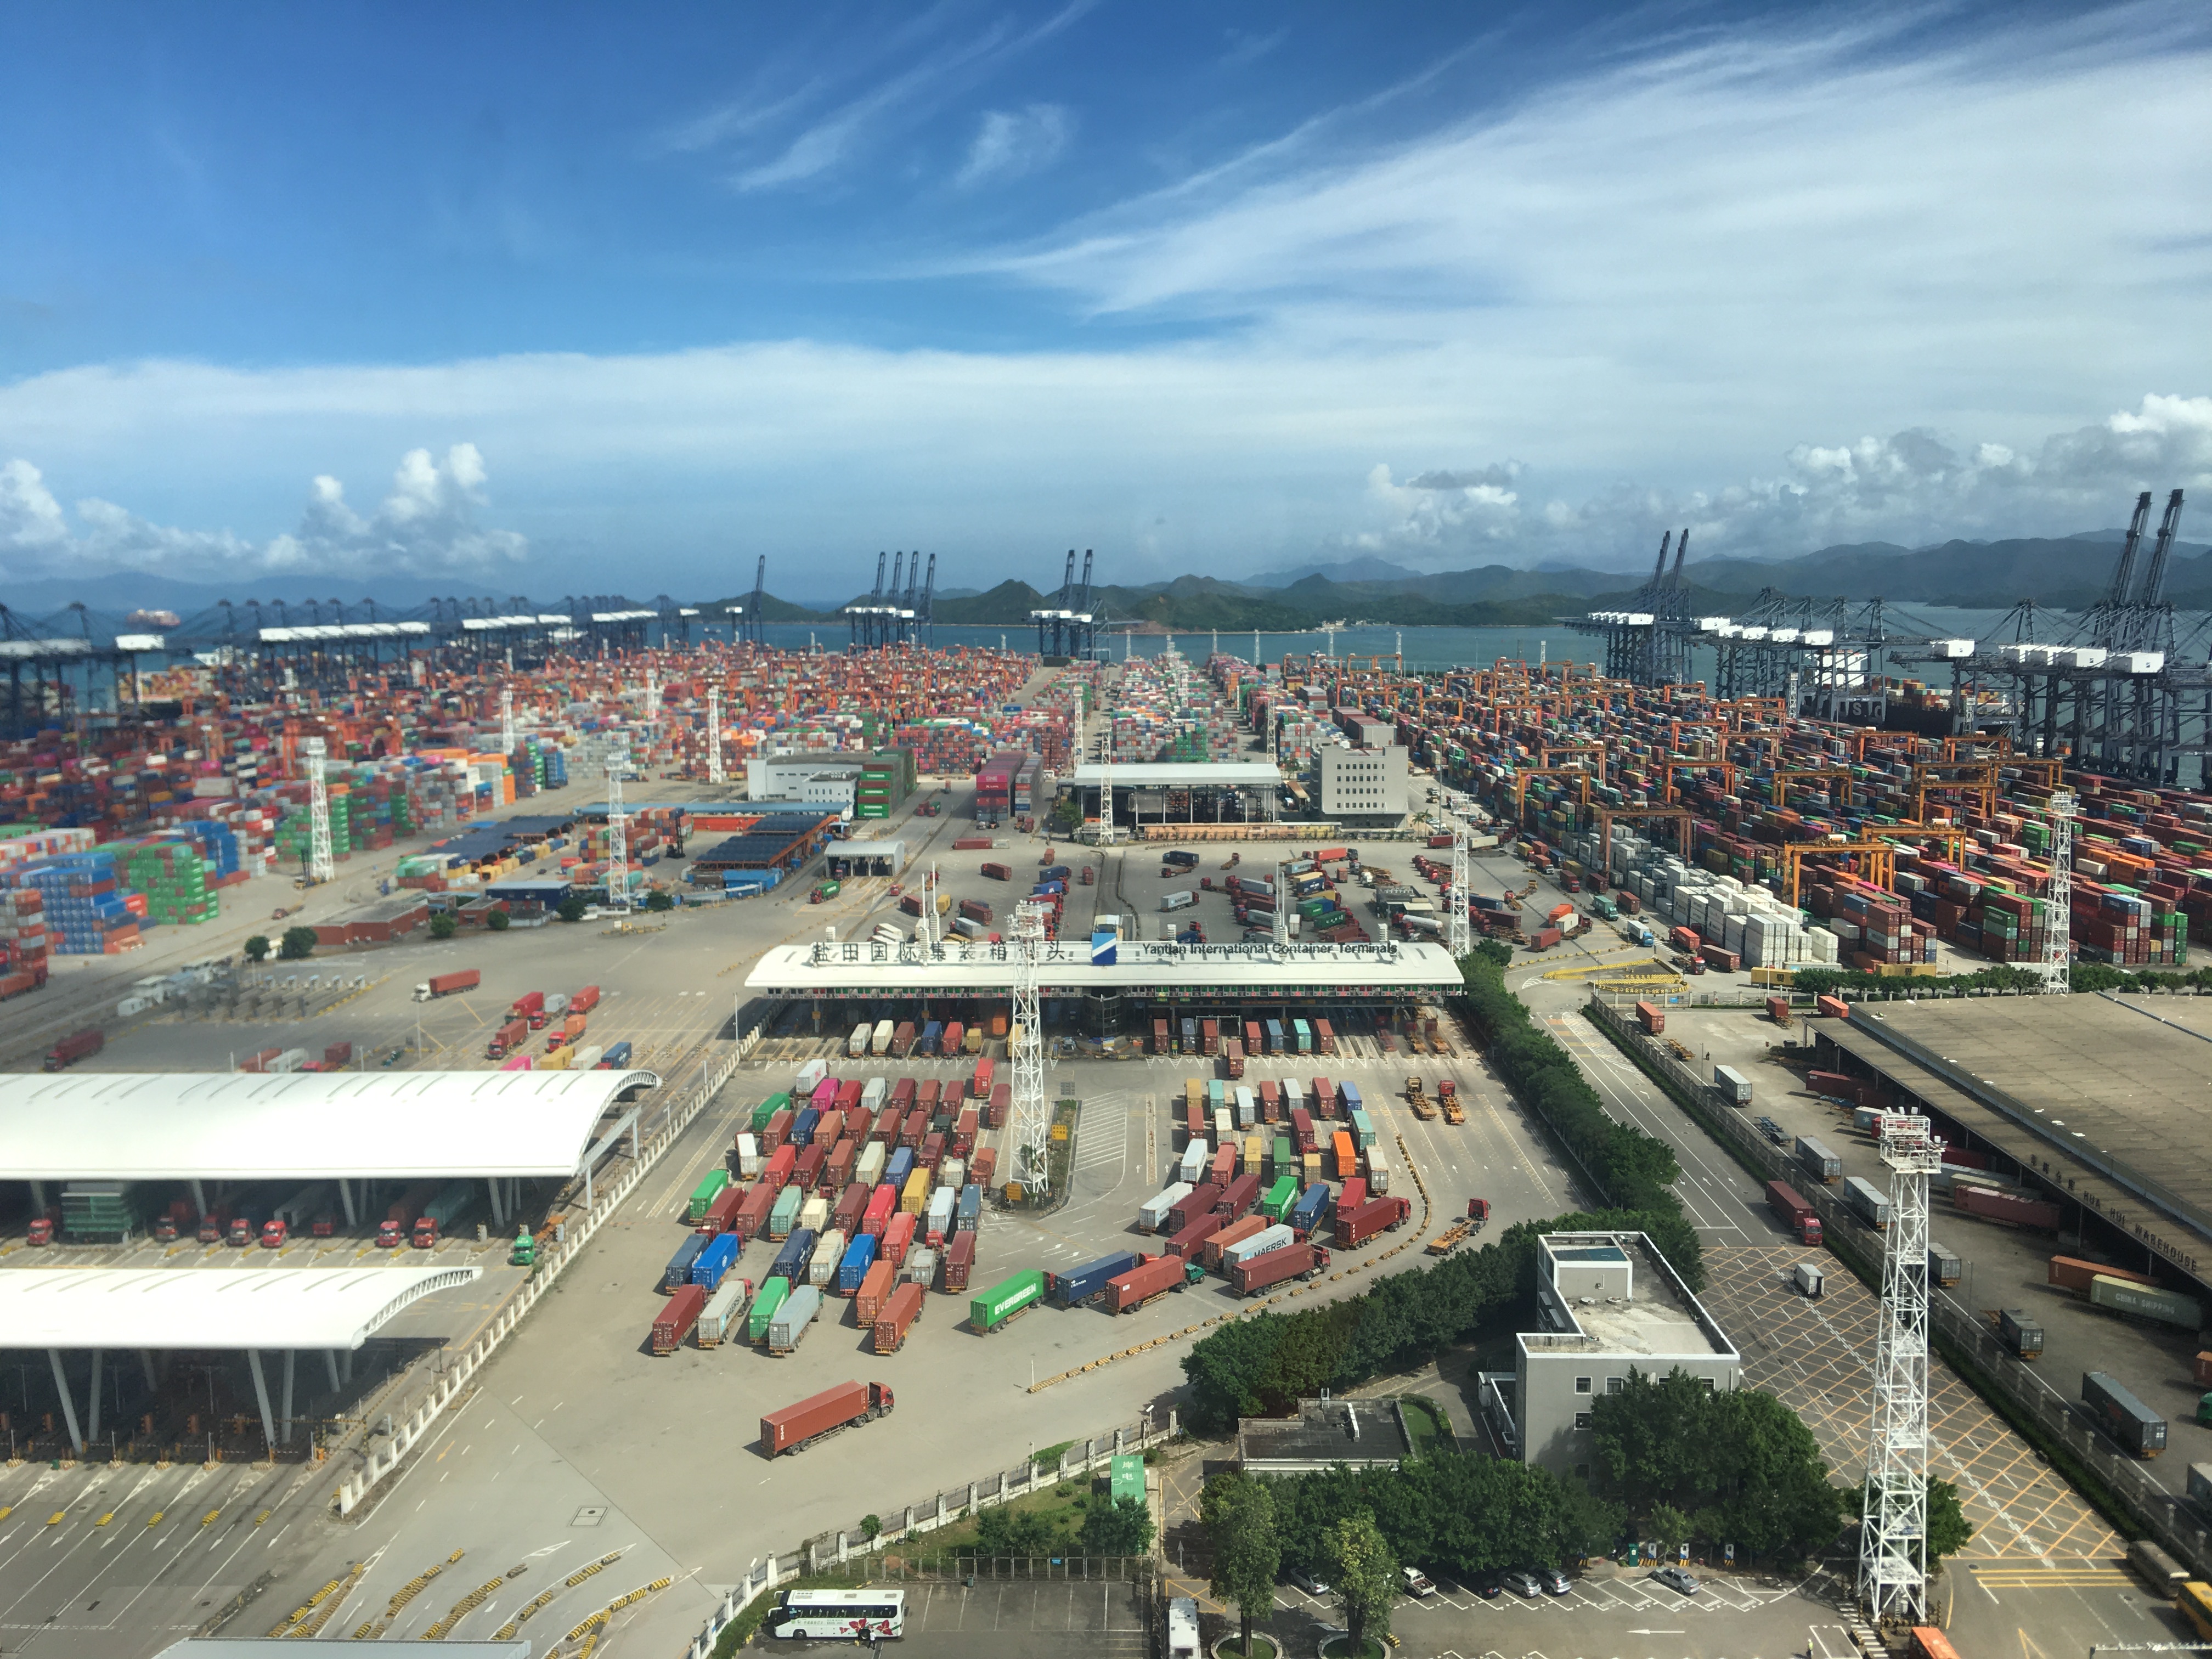 China shipping agent sea freight to Philippines international logistics Sunny Worldwide Logistics